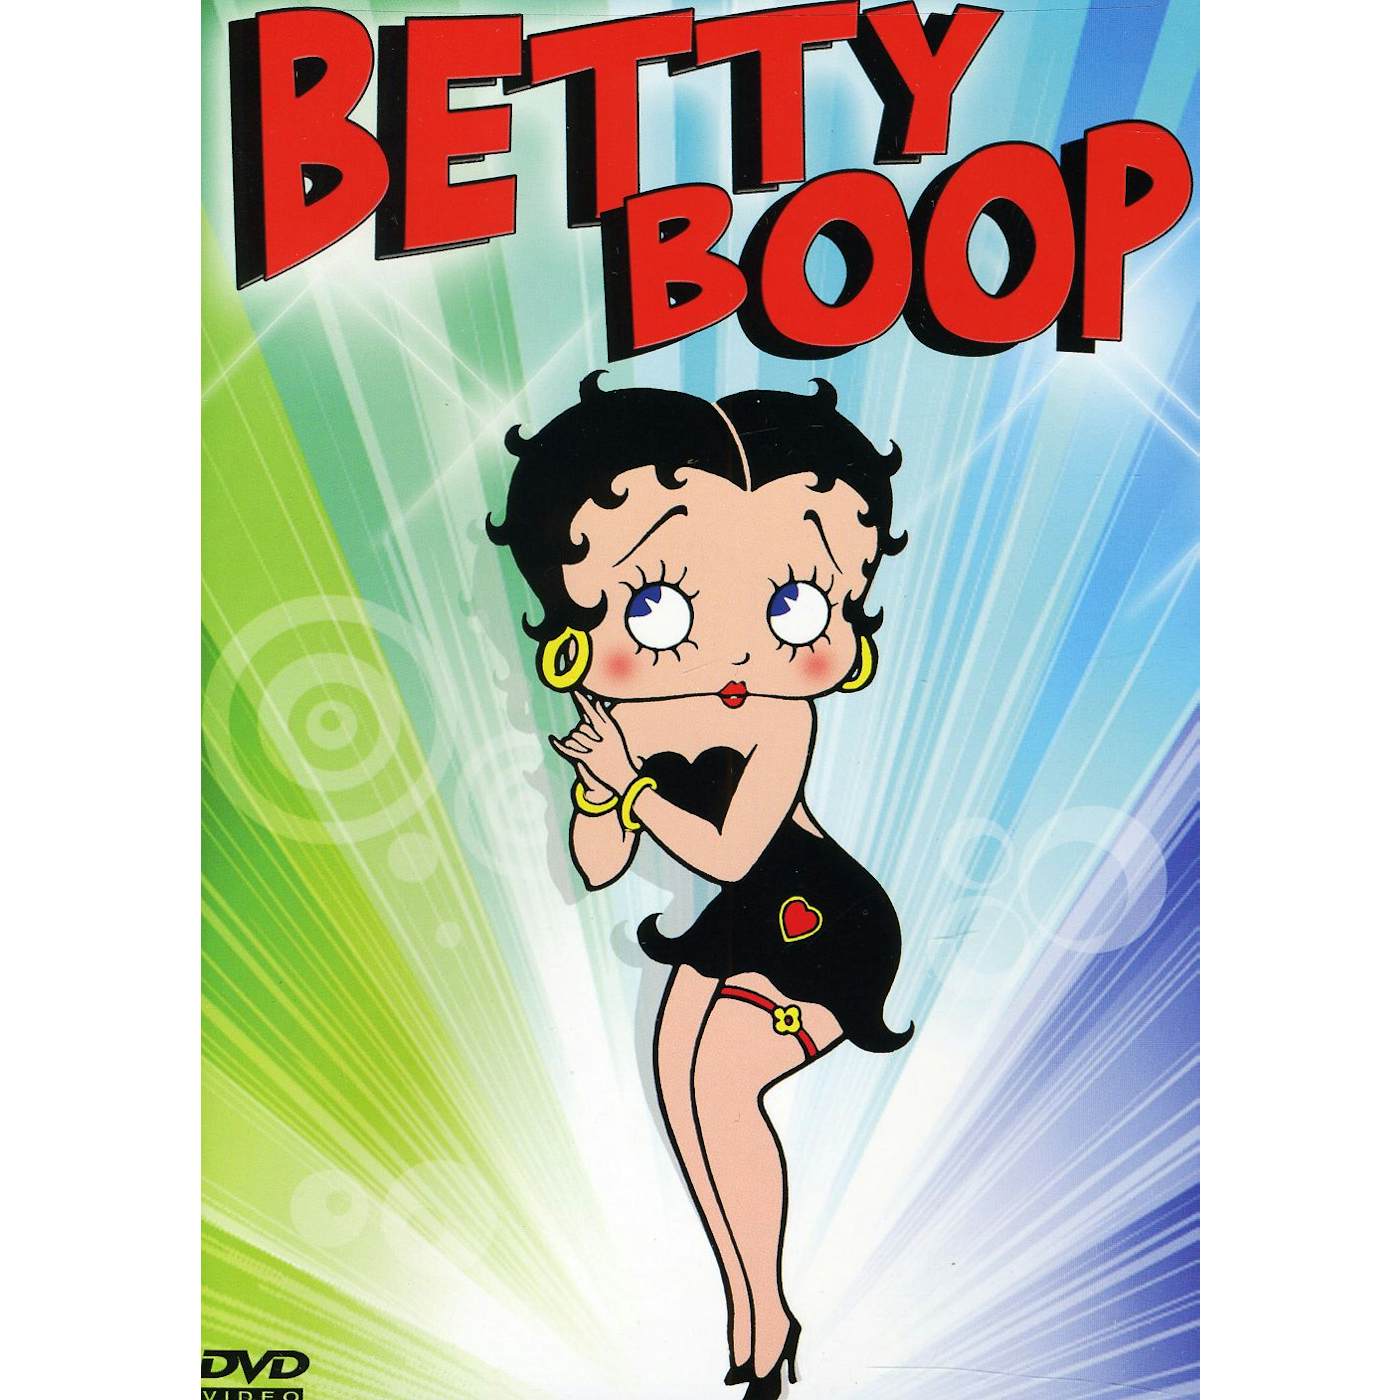 BETTY BOOP DVD